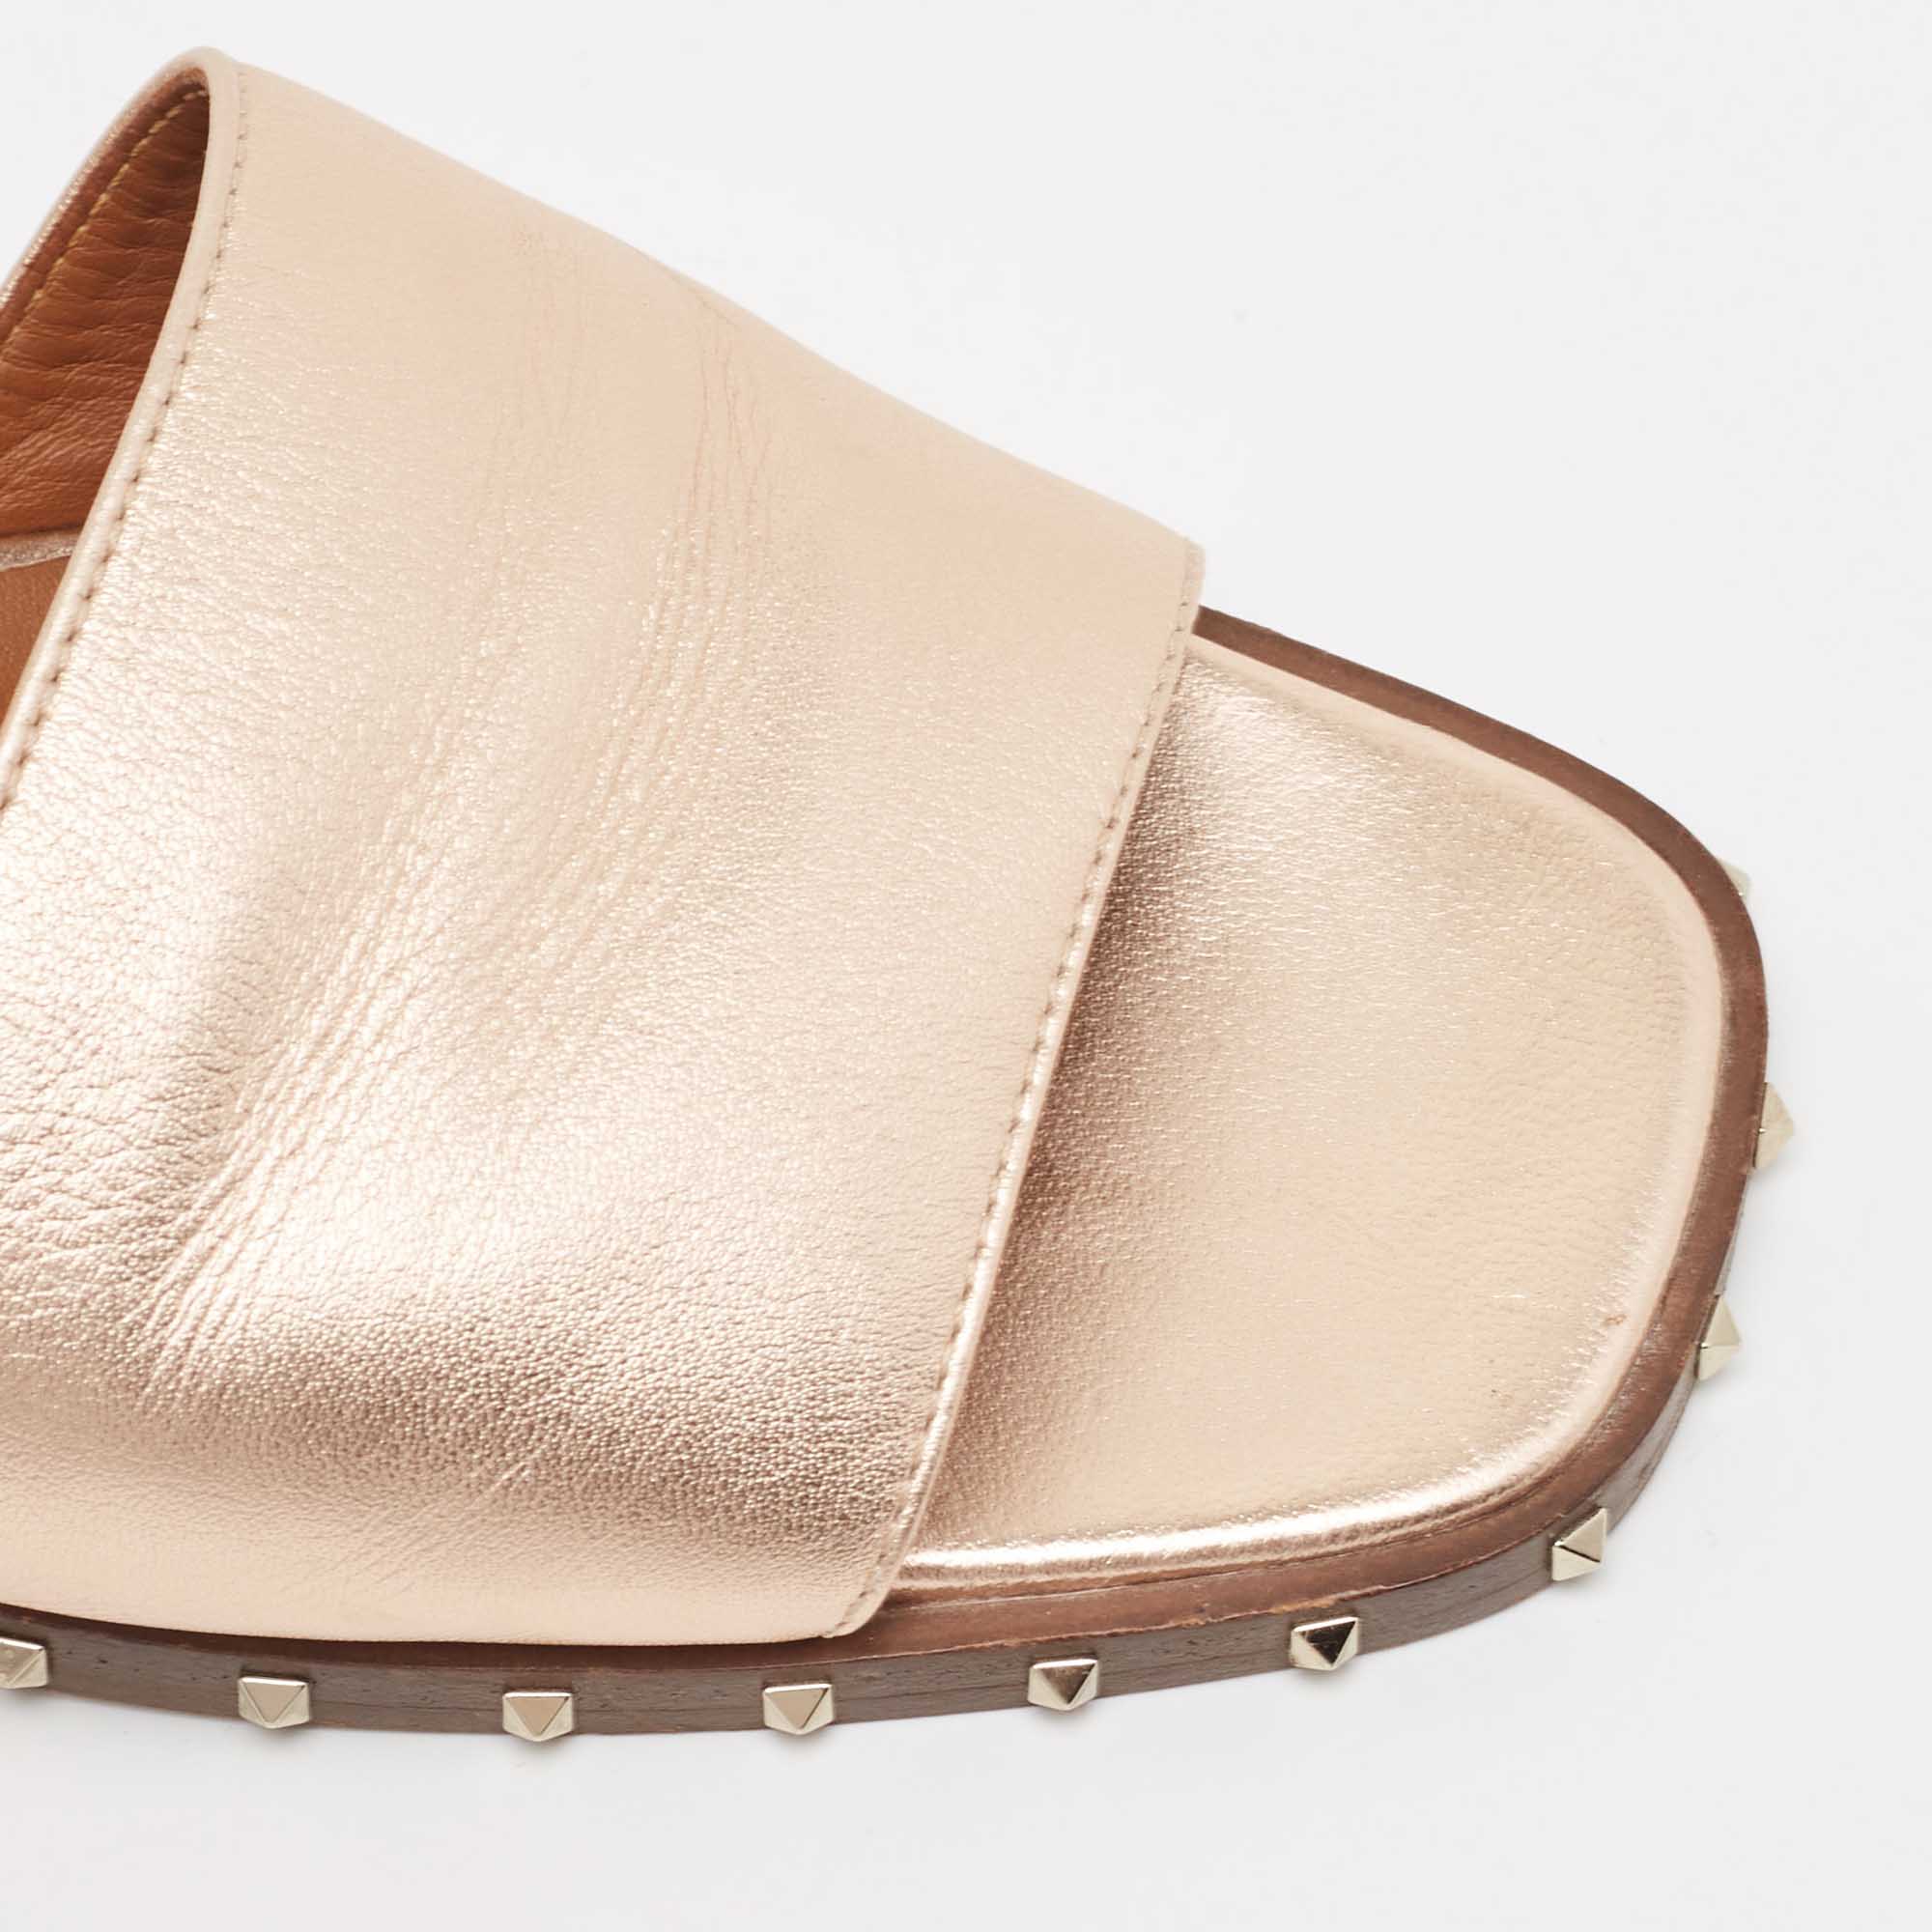 Valentino Metallic Leather Rockstud Open Toe Block Heel Slide Sandals Size 38.5